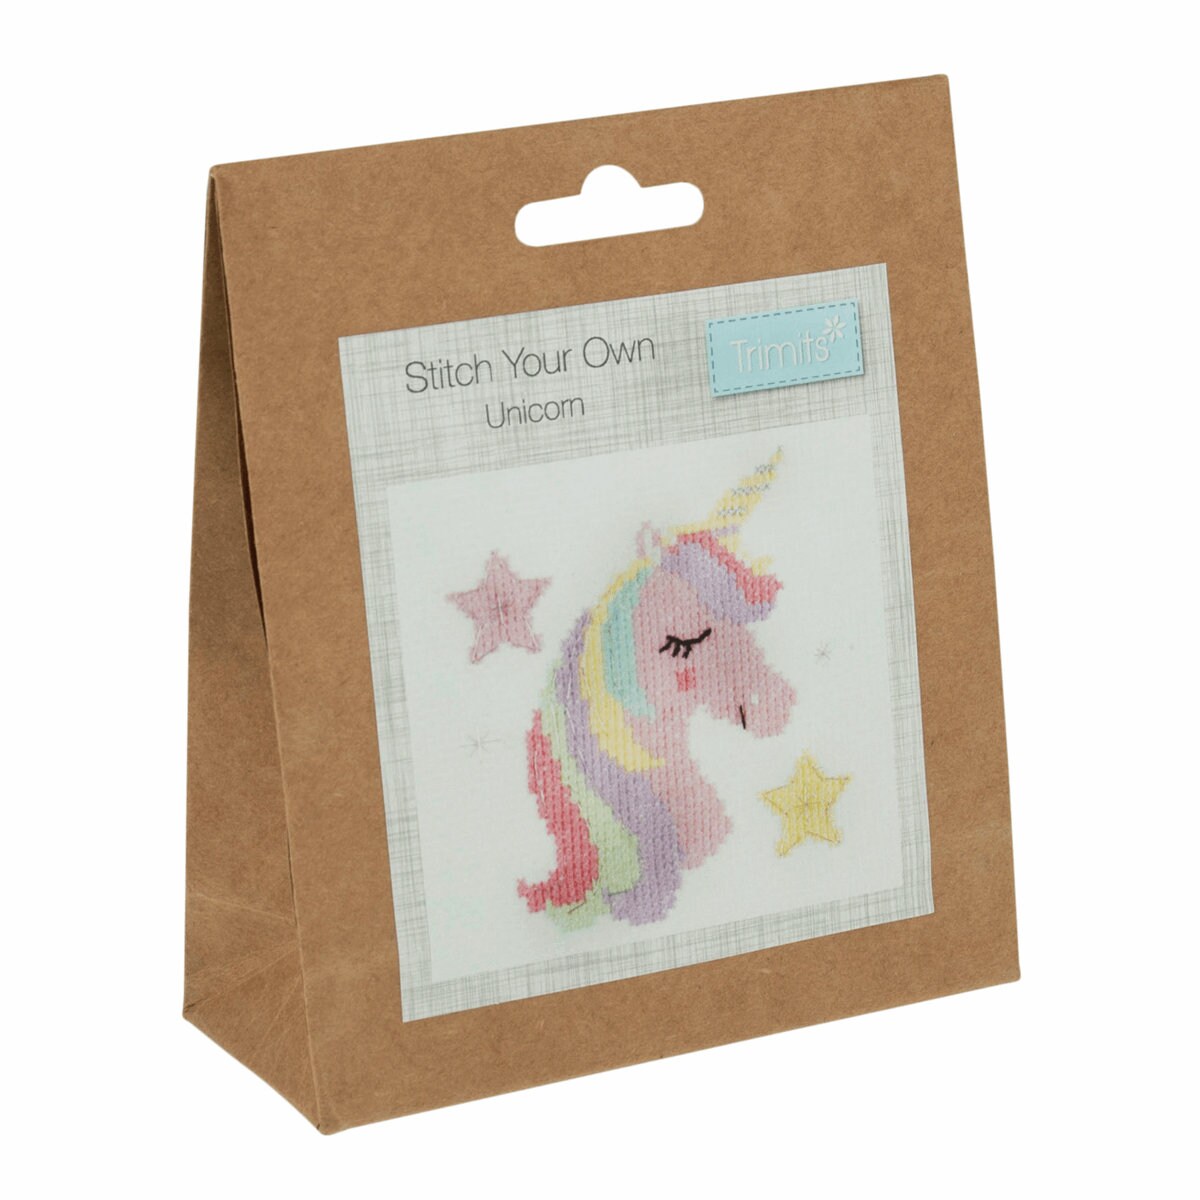 Unicorn Craft Kit for Kids. Unicorn Dream Catcher DIY. Unicorn